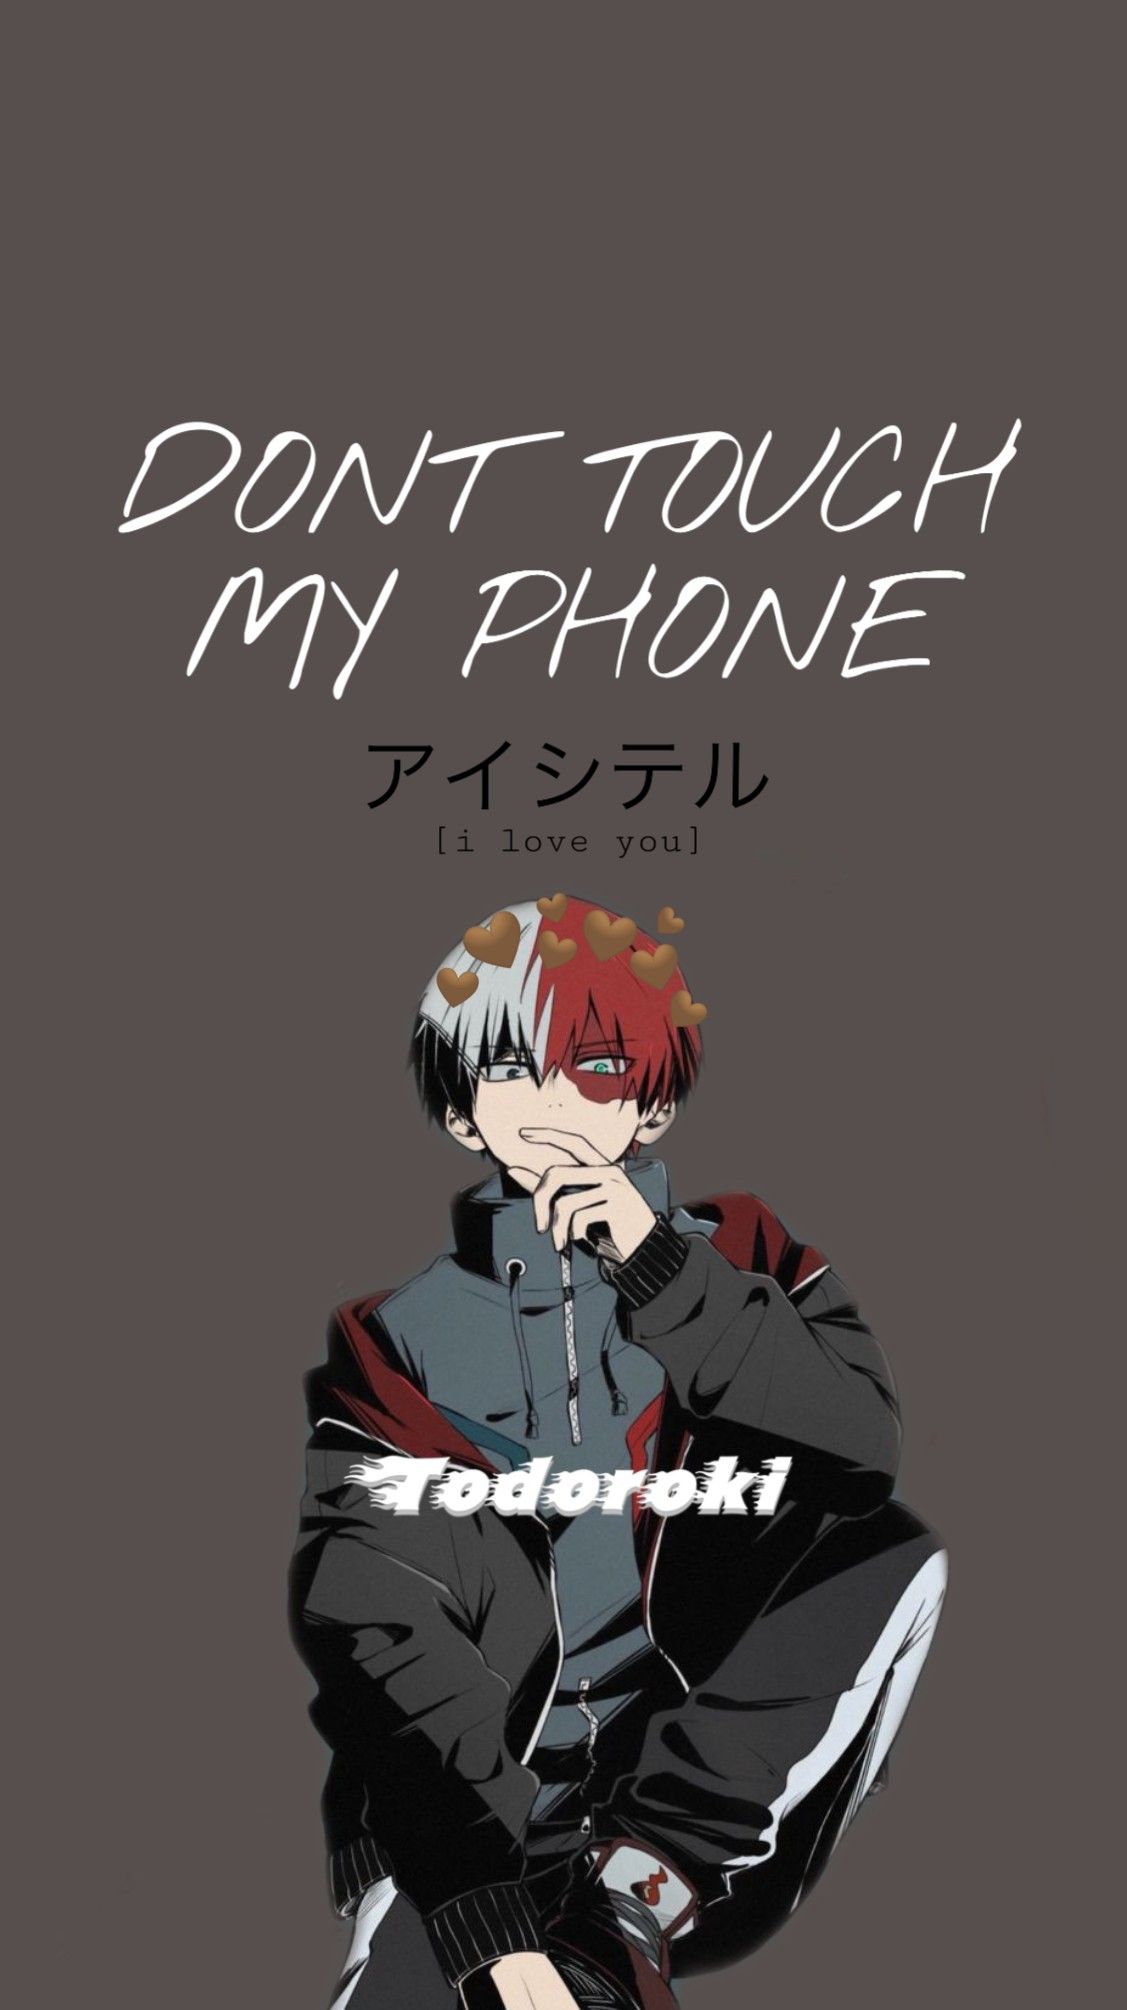 Shoto todoroki wallpaper. Anime wallpaper phone, Anime wallpaper iphone, Cool anime wallpaper